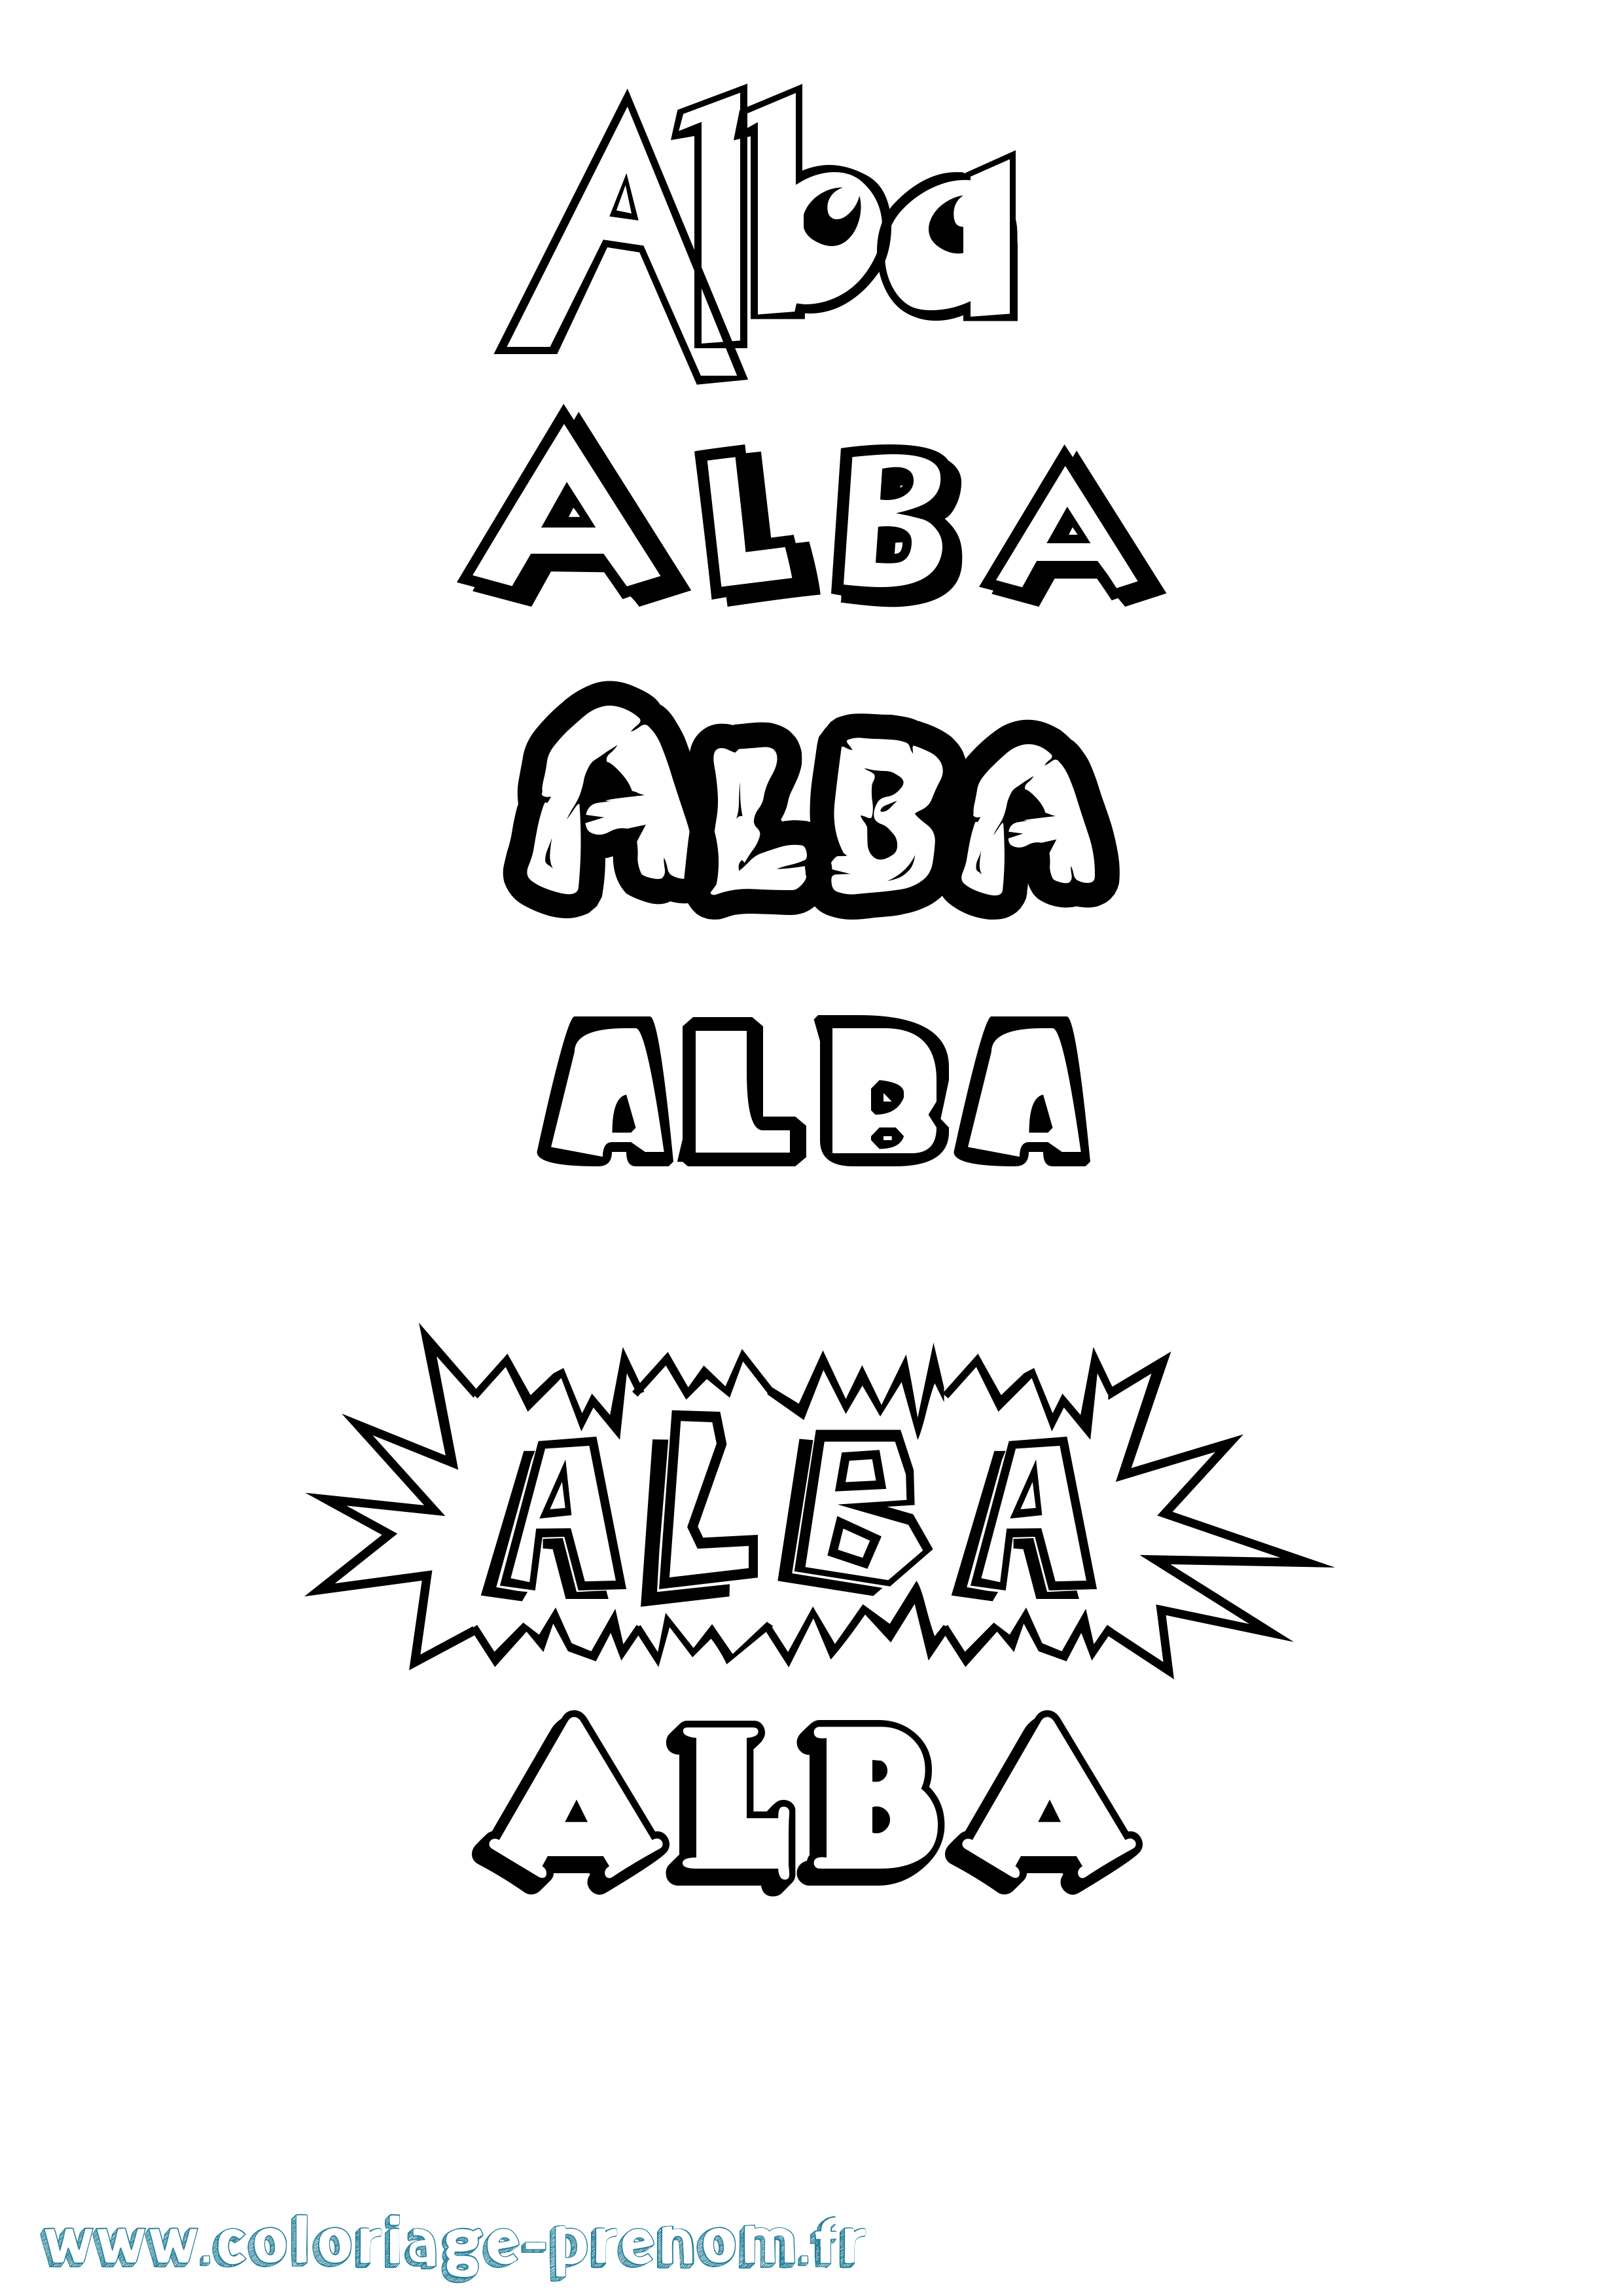 Coloriage prénom Alba